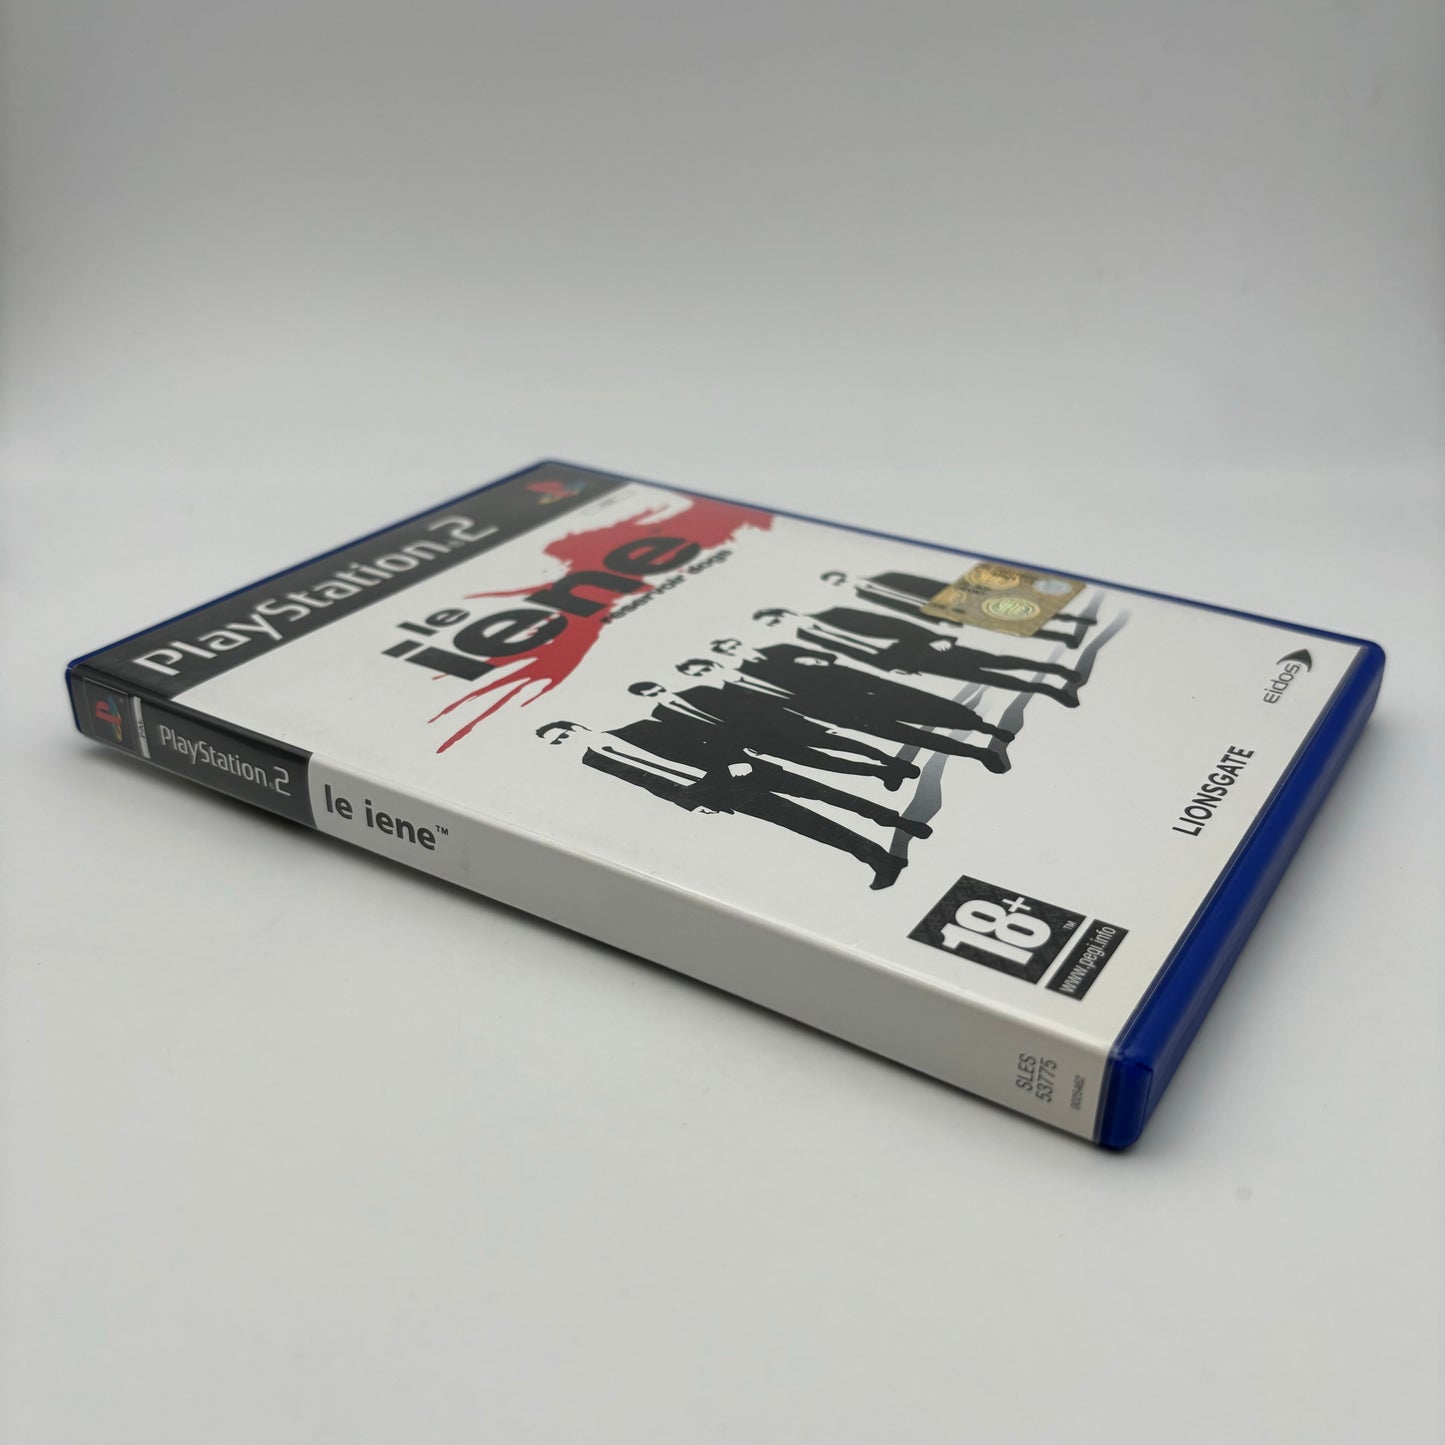 Le Iene PS2 PlayStation 2 PAL ITA (USATO)